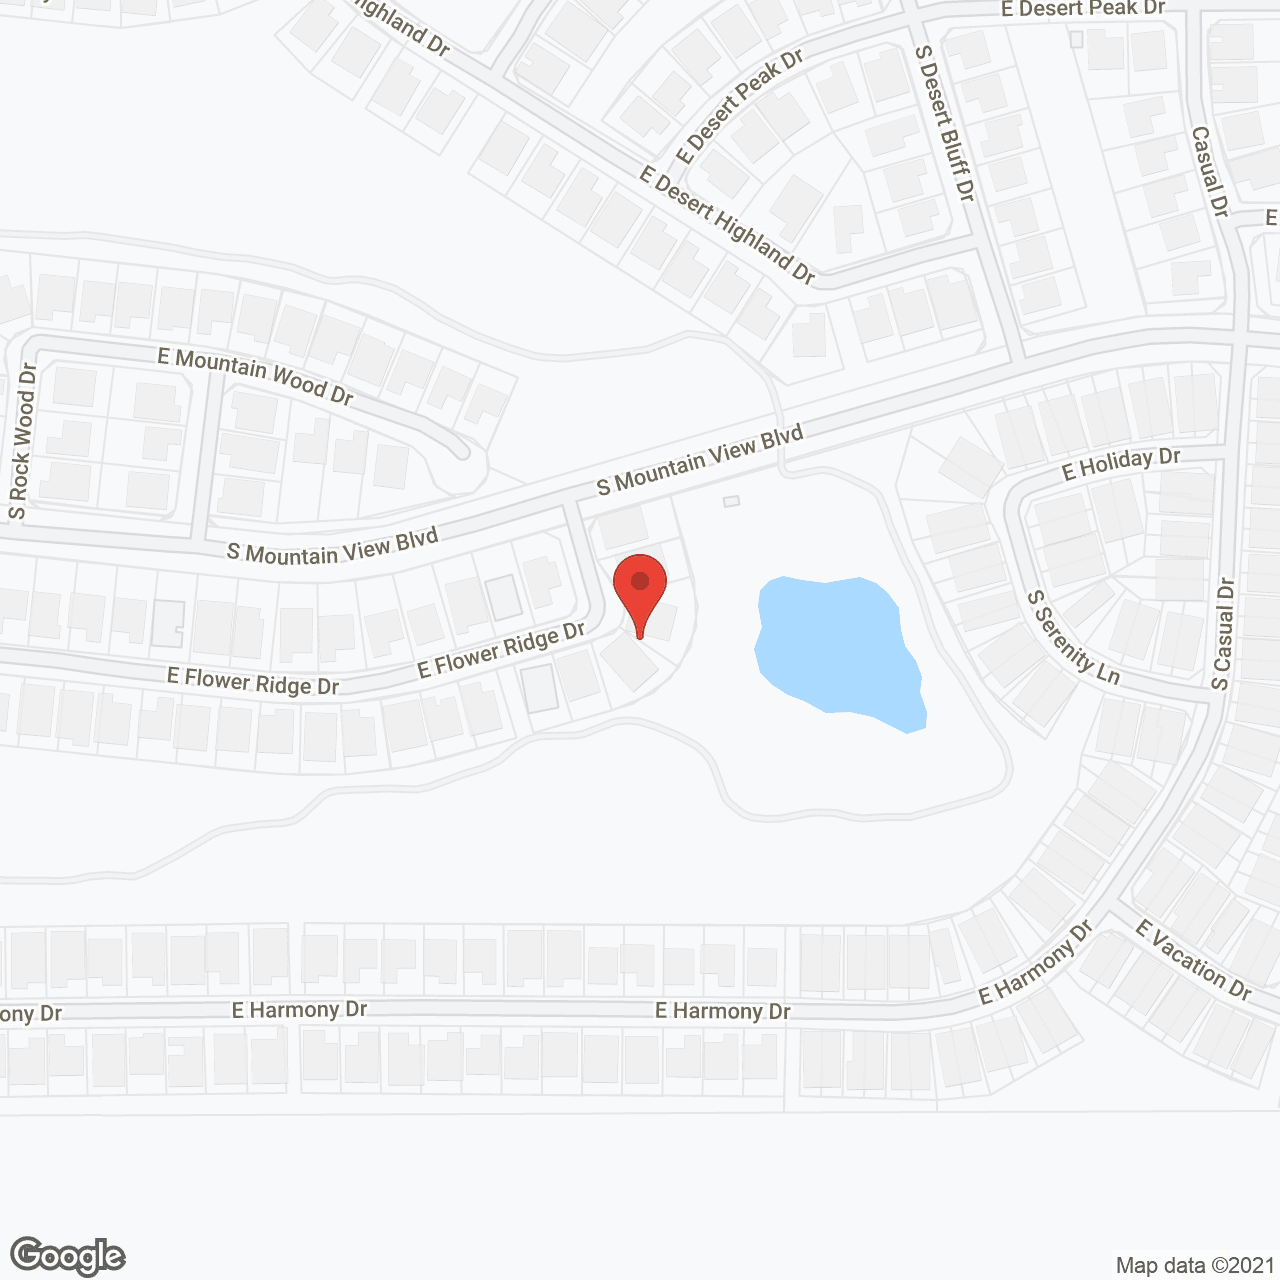 Saddlebrooke Resort Community in google map